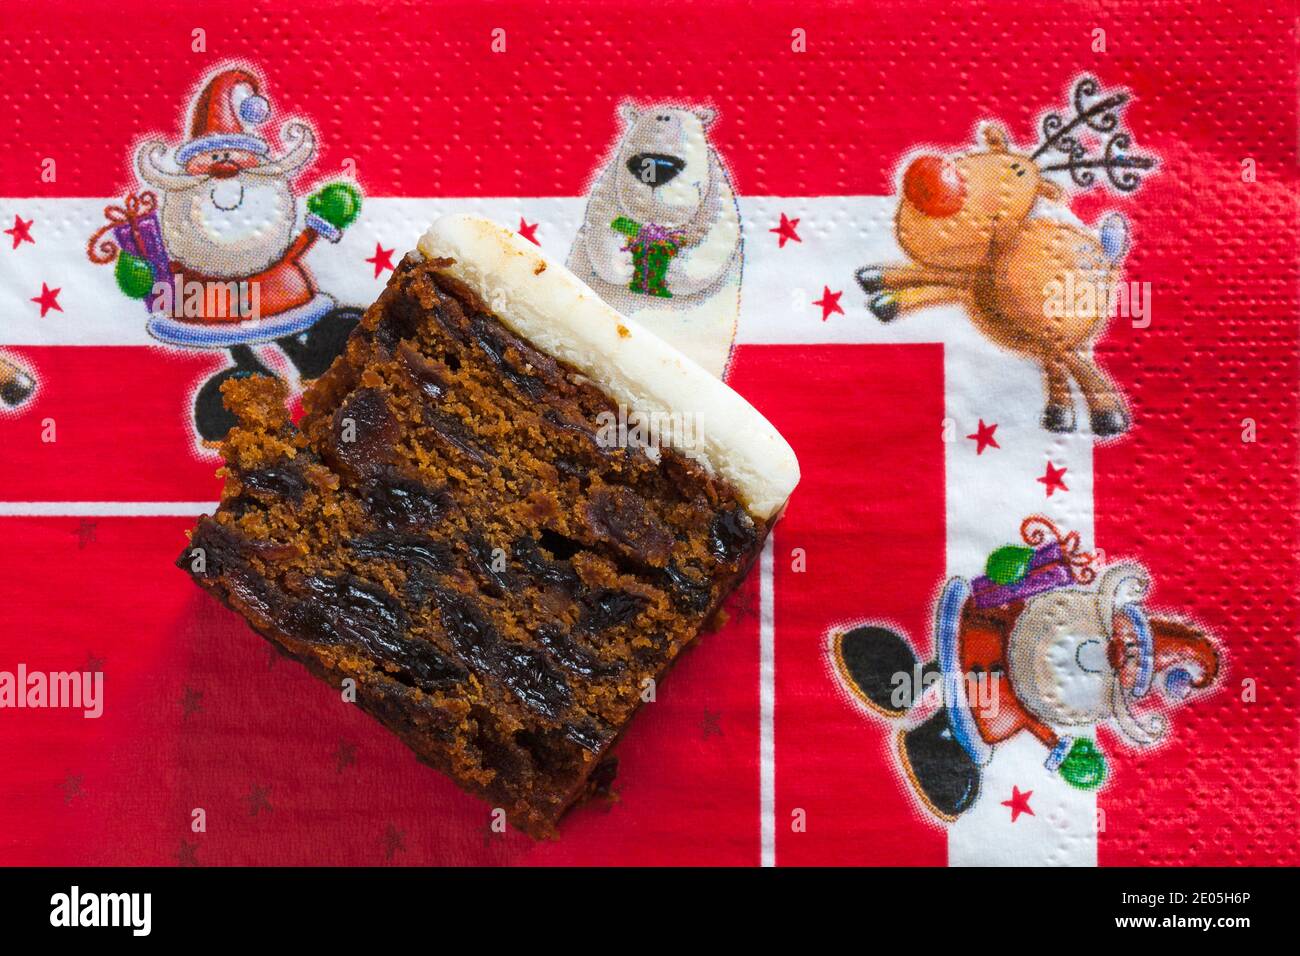 Slice of M&S Iced Fruit Cake Christmas Cake set on red Christmas serviette napkin - UK festive Xmas Stock Photo